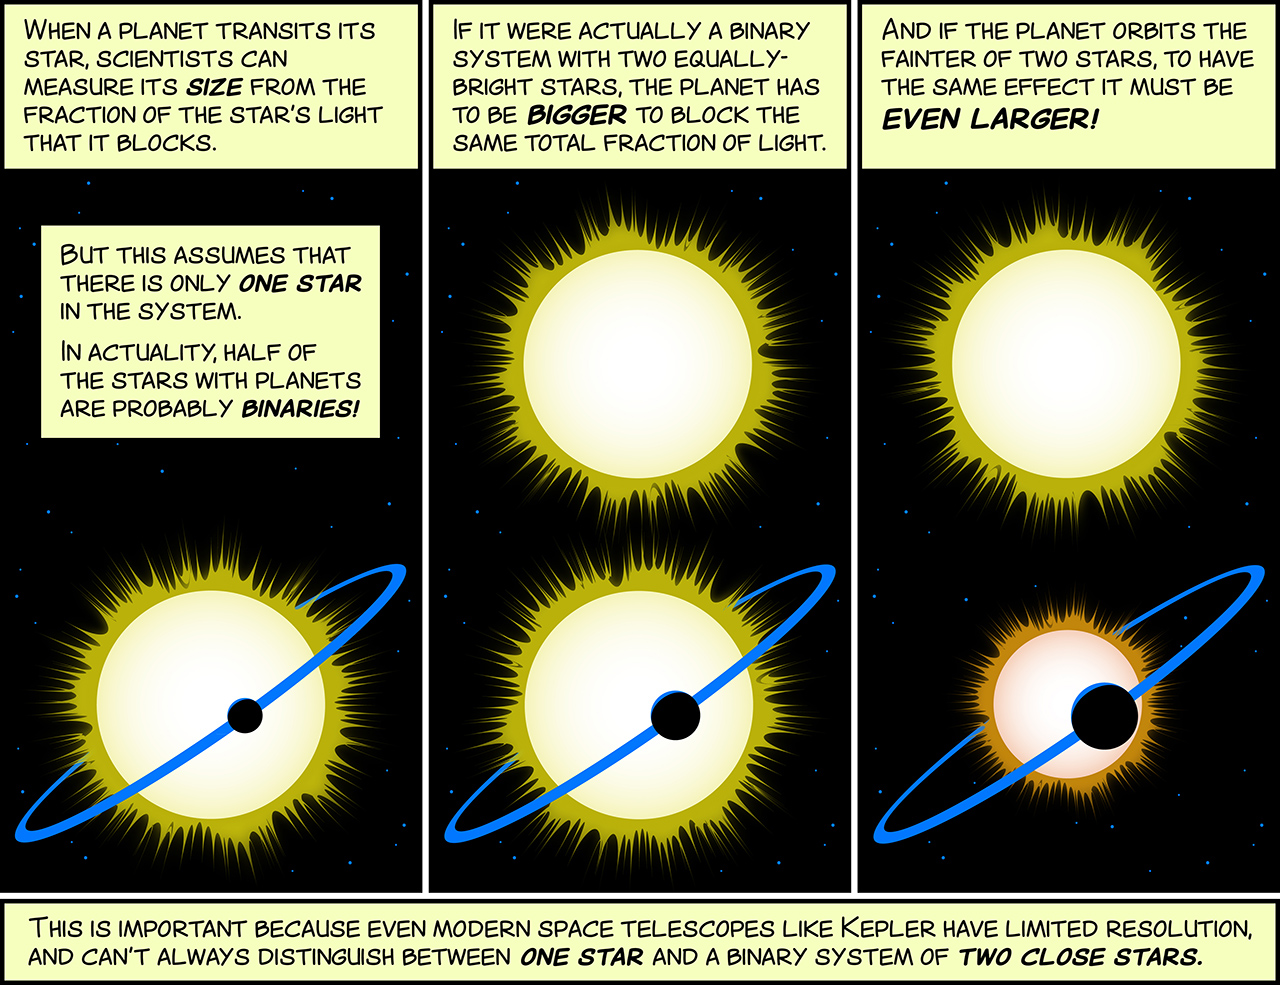 Exoplanet comic